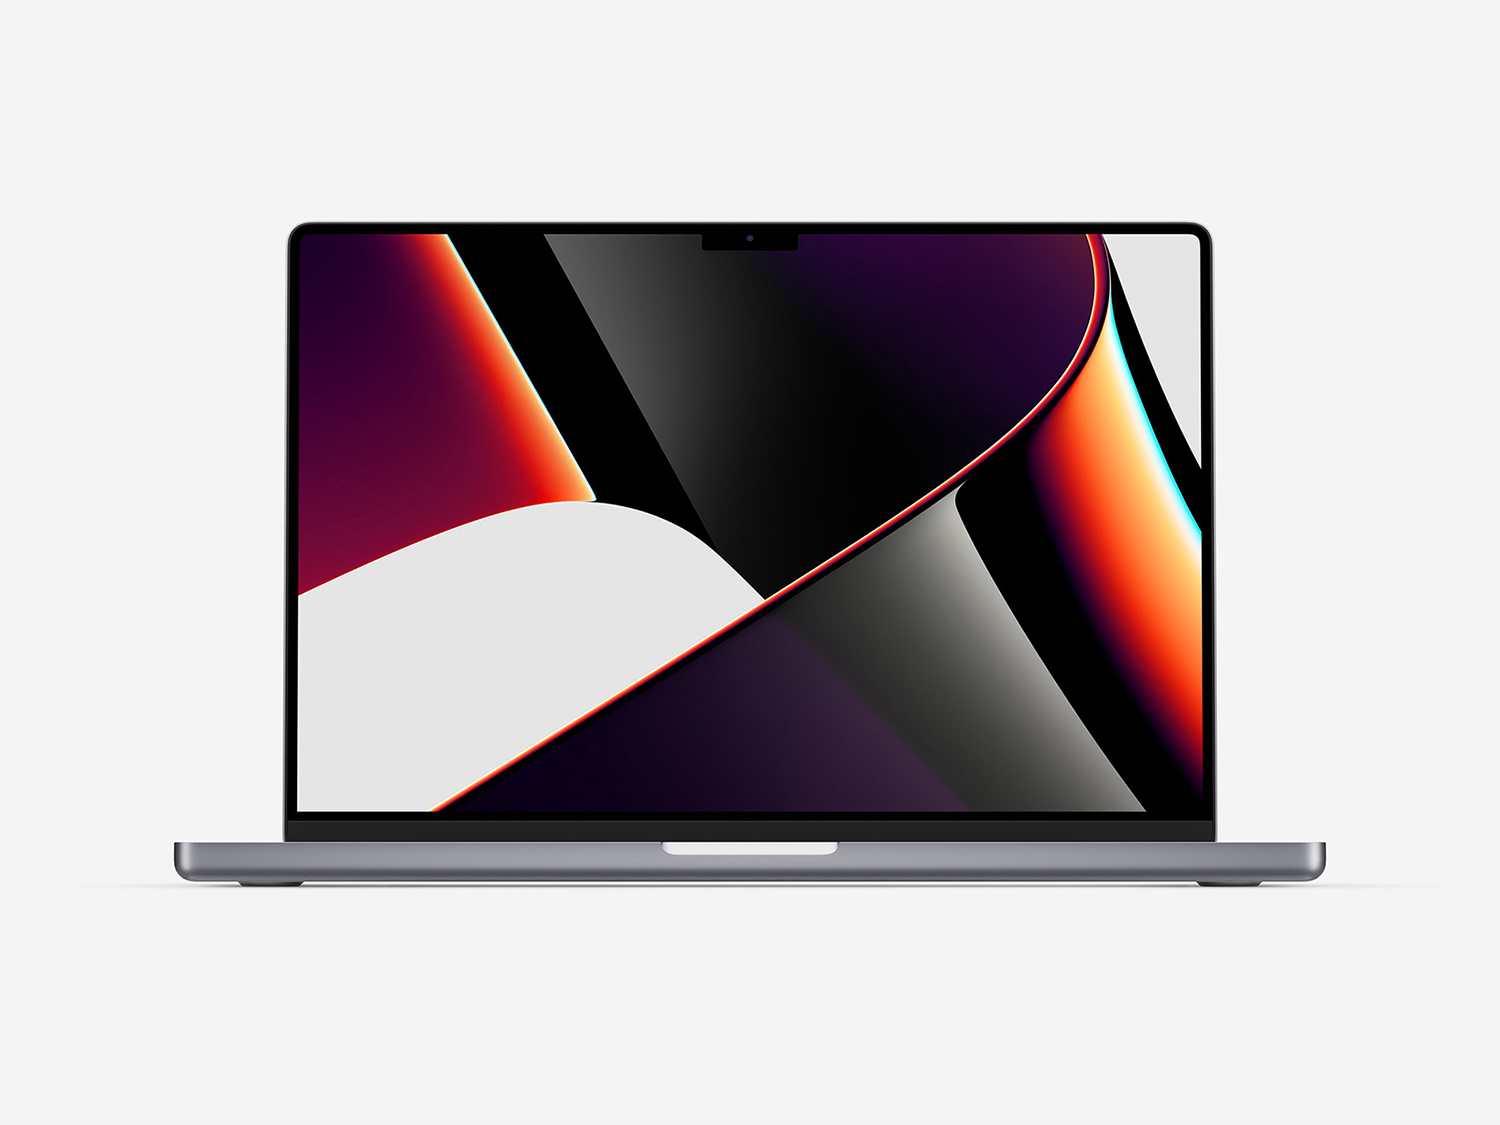 Free New MacBook Pro 16 Inch Mockup